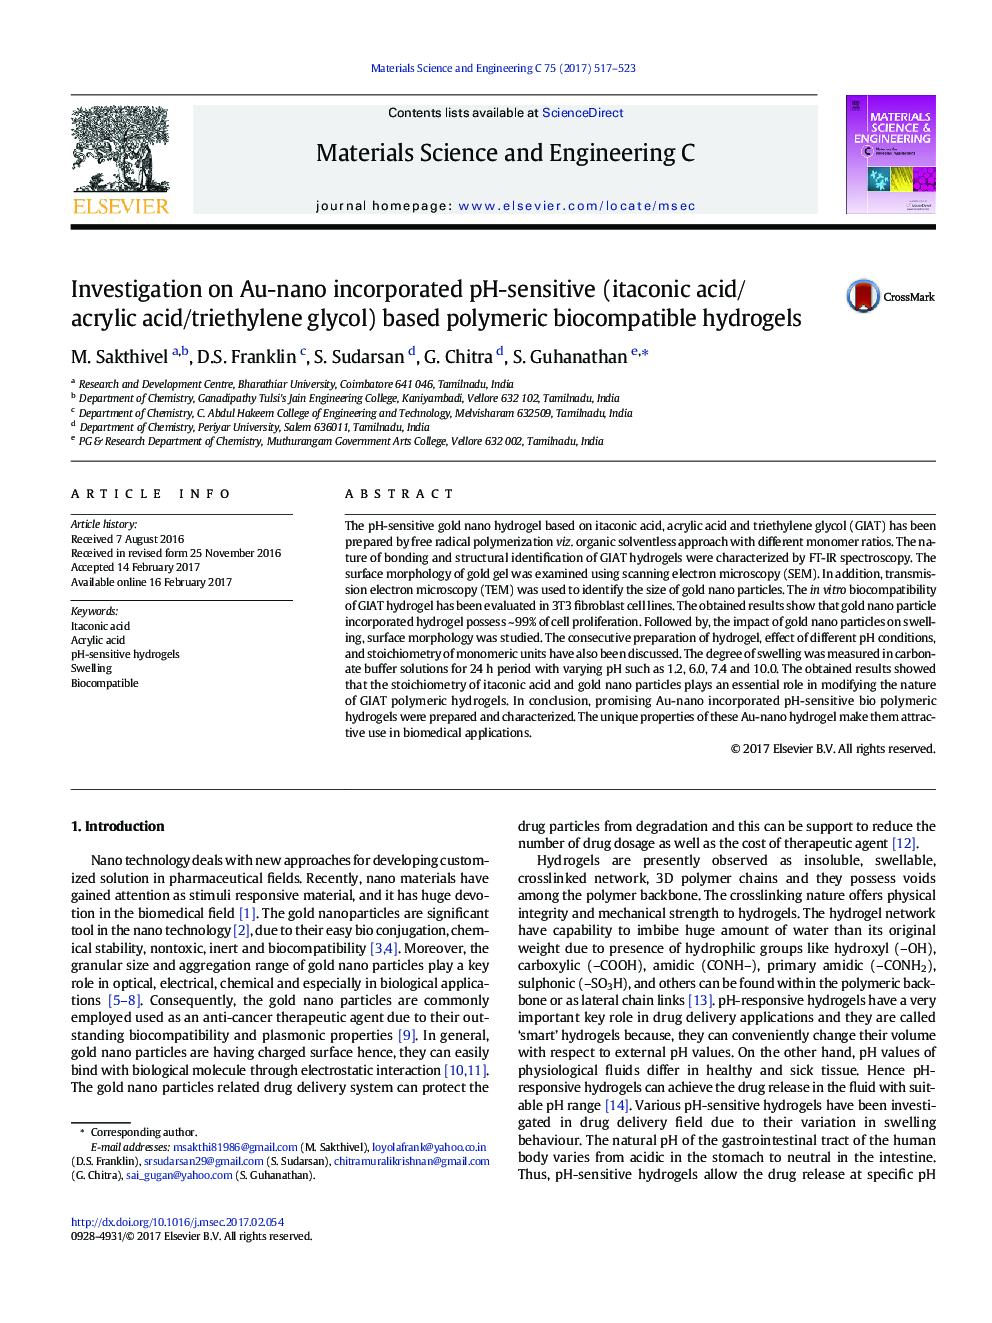 Investigation on Au-nano incorporated pH-sensitive (itaconic acid/acrylic acid/triethylene glycol) based polymeric biocompatible hydrogels